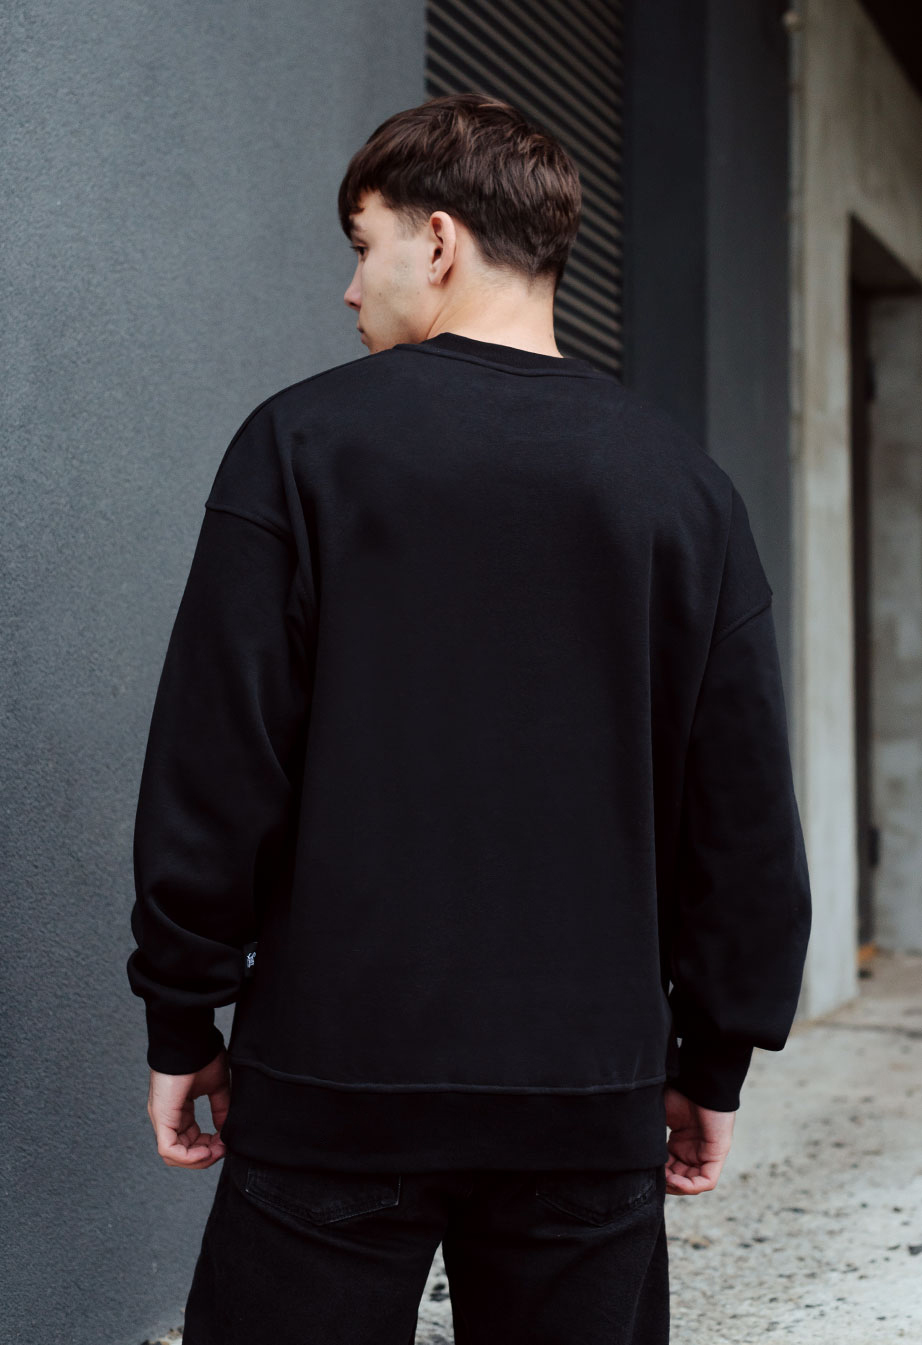 Bluza Staff black original oversize fleece